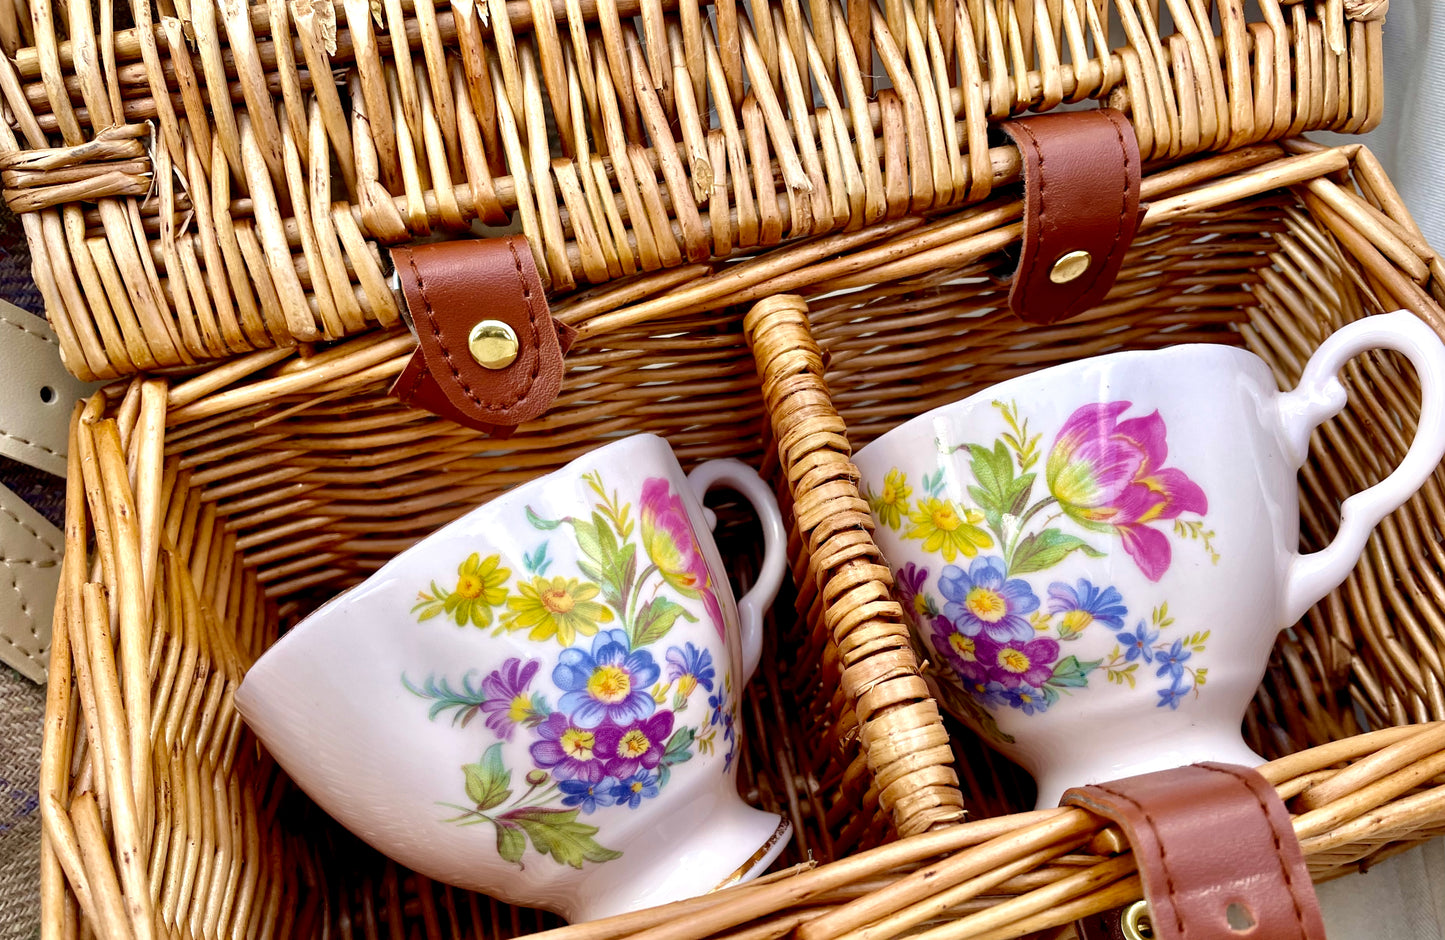 vintage tea cups in picnic hamper